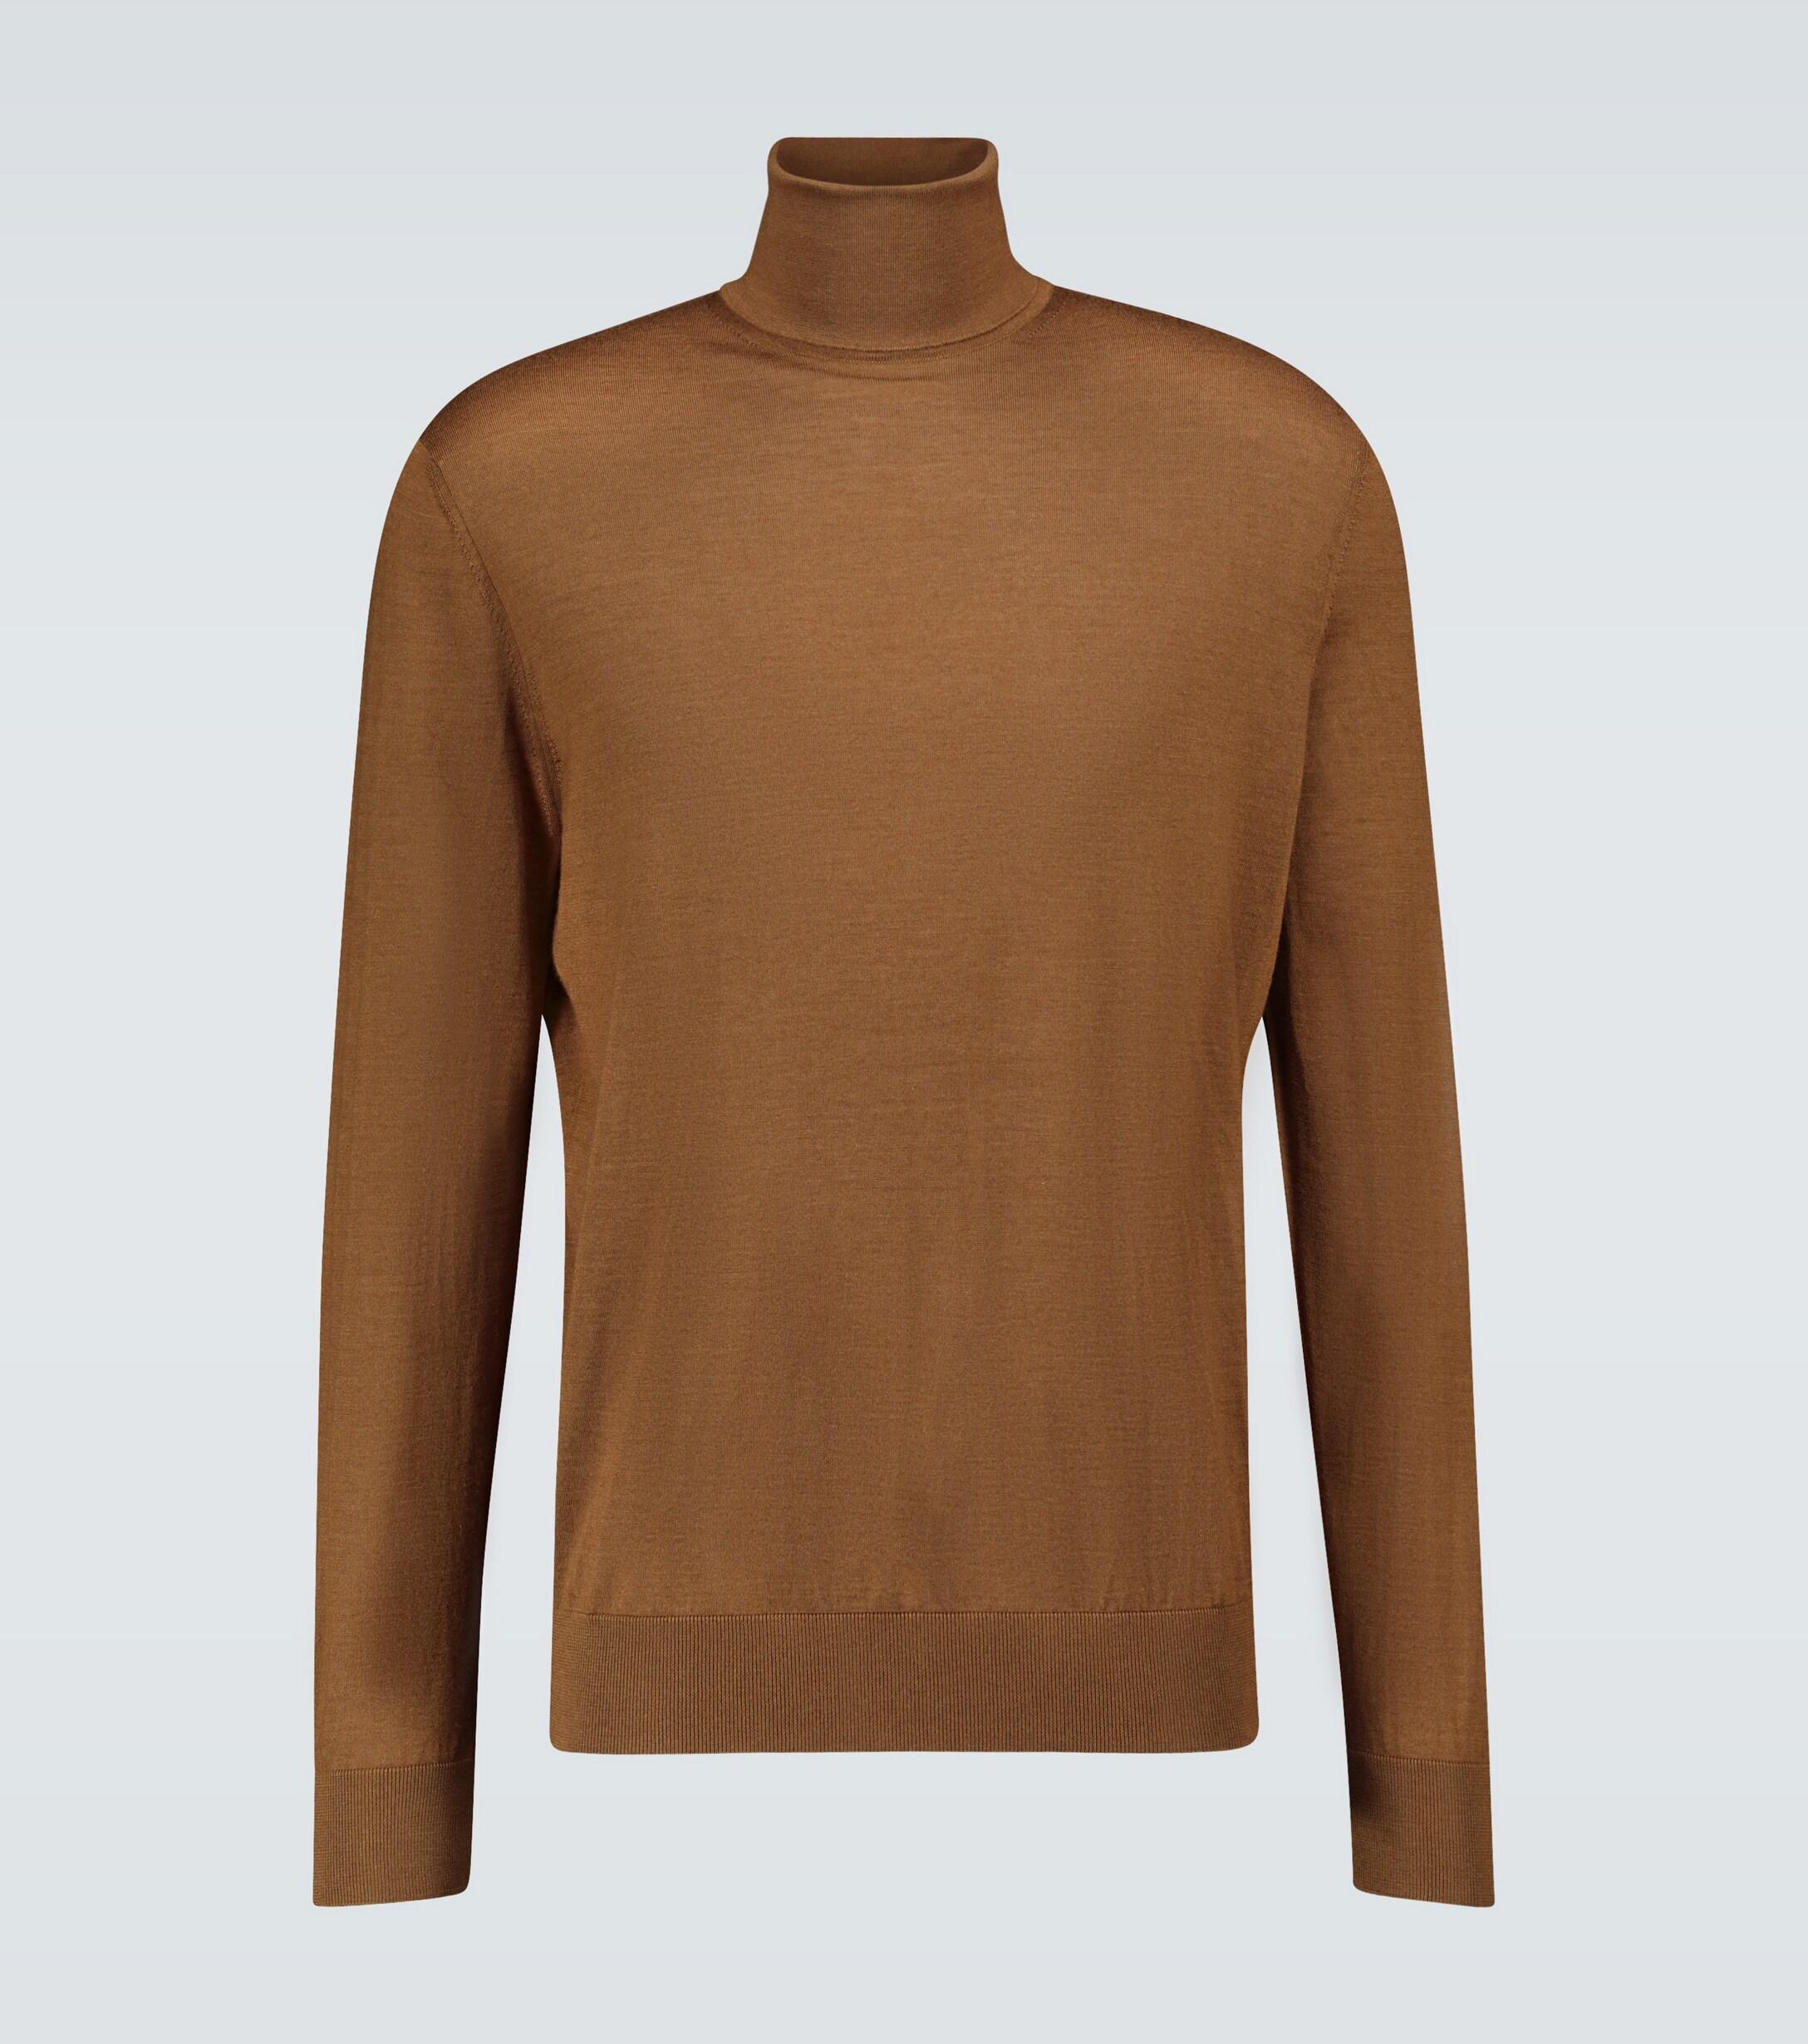 Ermenegildo Zegna Cashmere Turtleneck Sweater in Brown for Men - Lyst